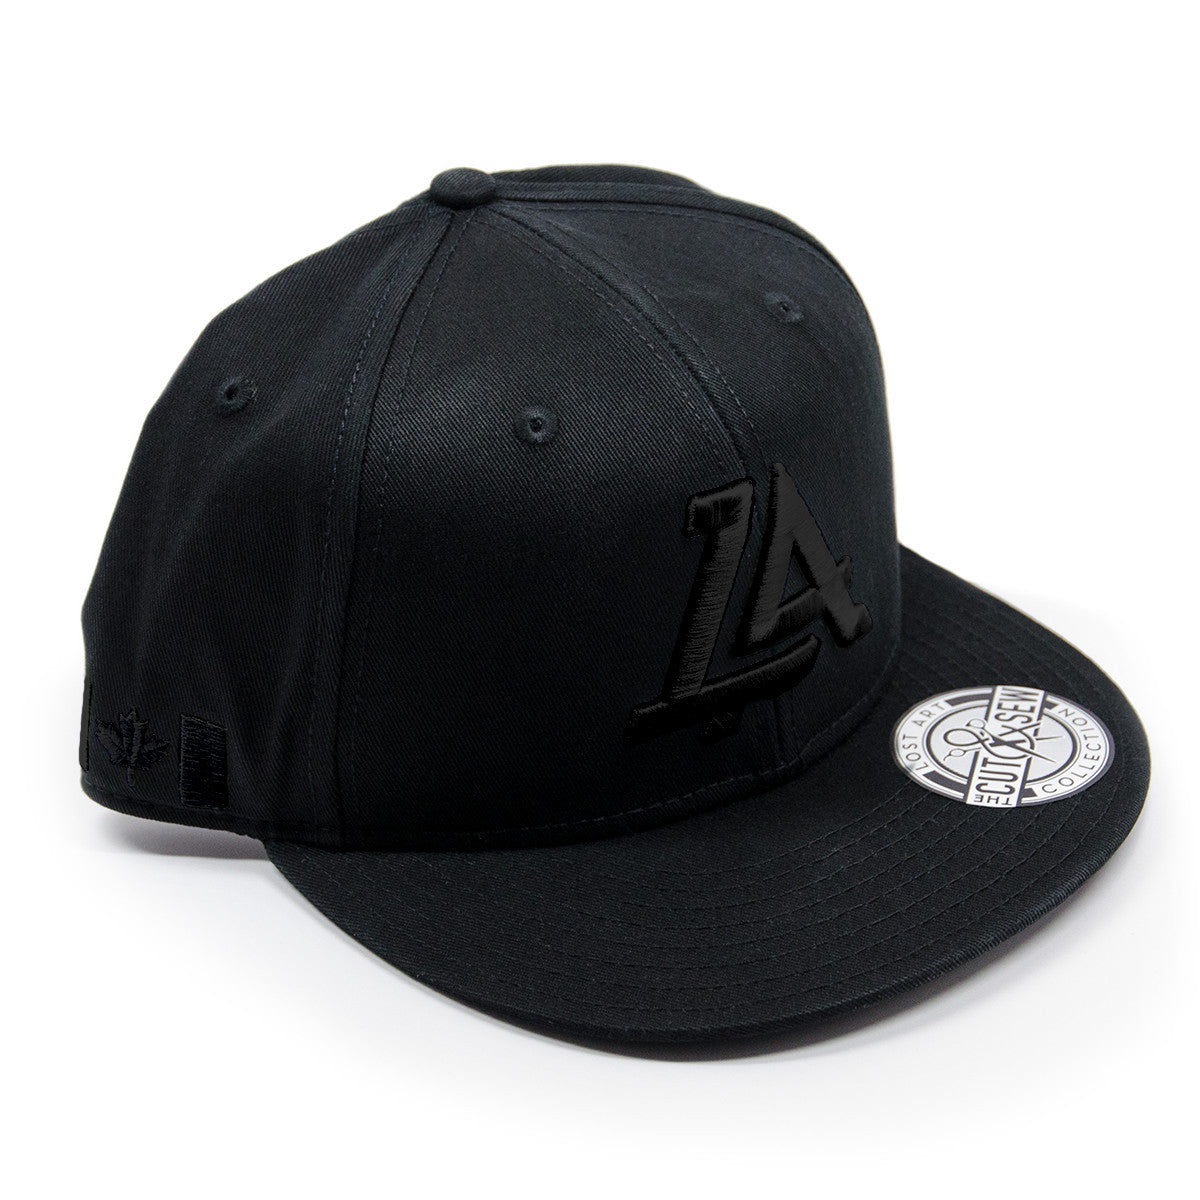 Lost Art Canada - black logo black snapback hat front view